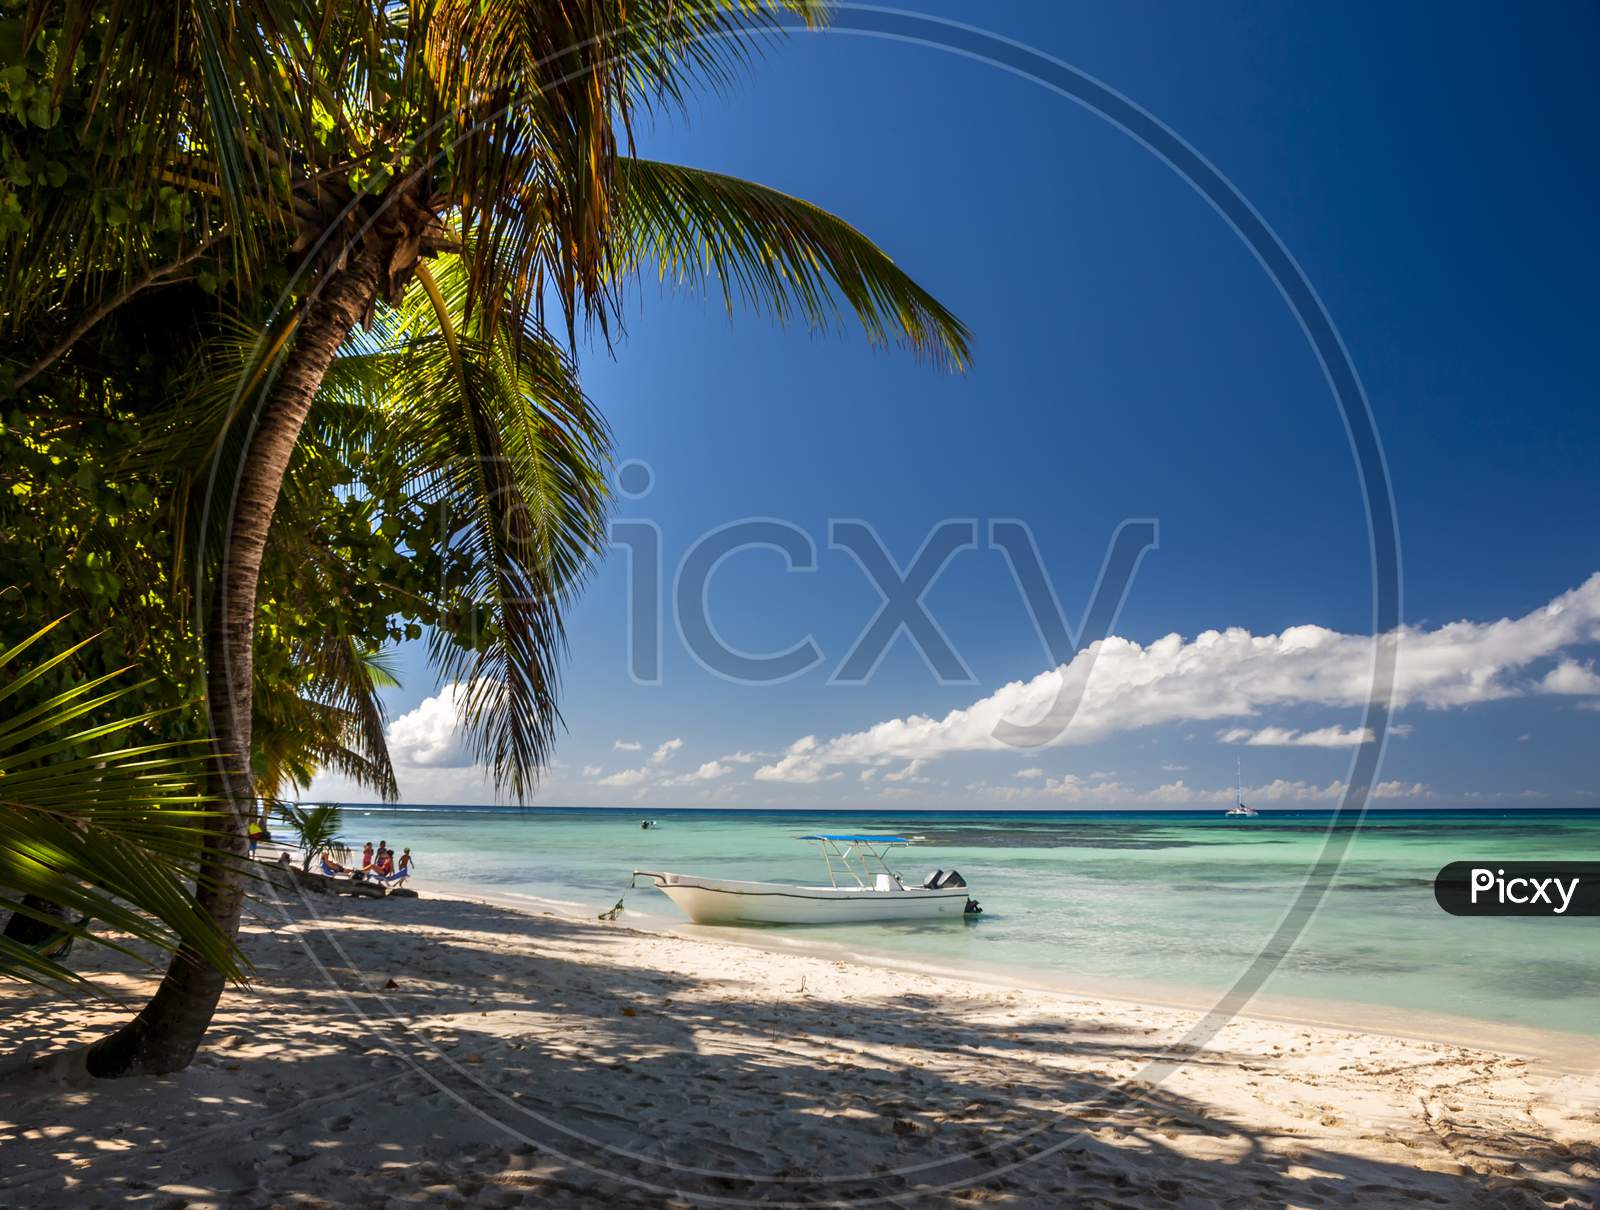 Single motor boat on a Caribbean beach.